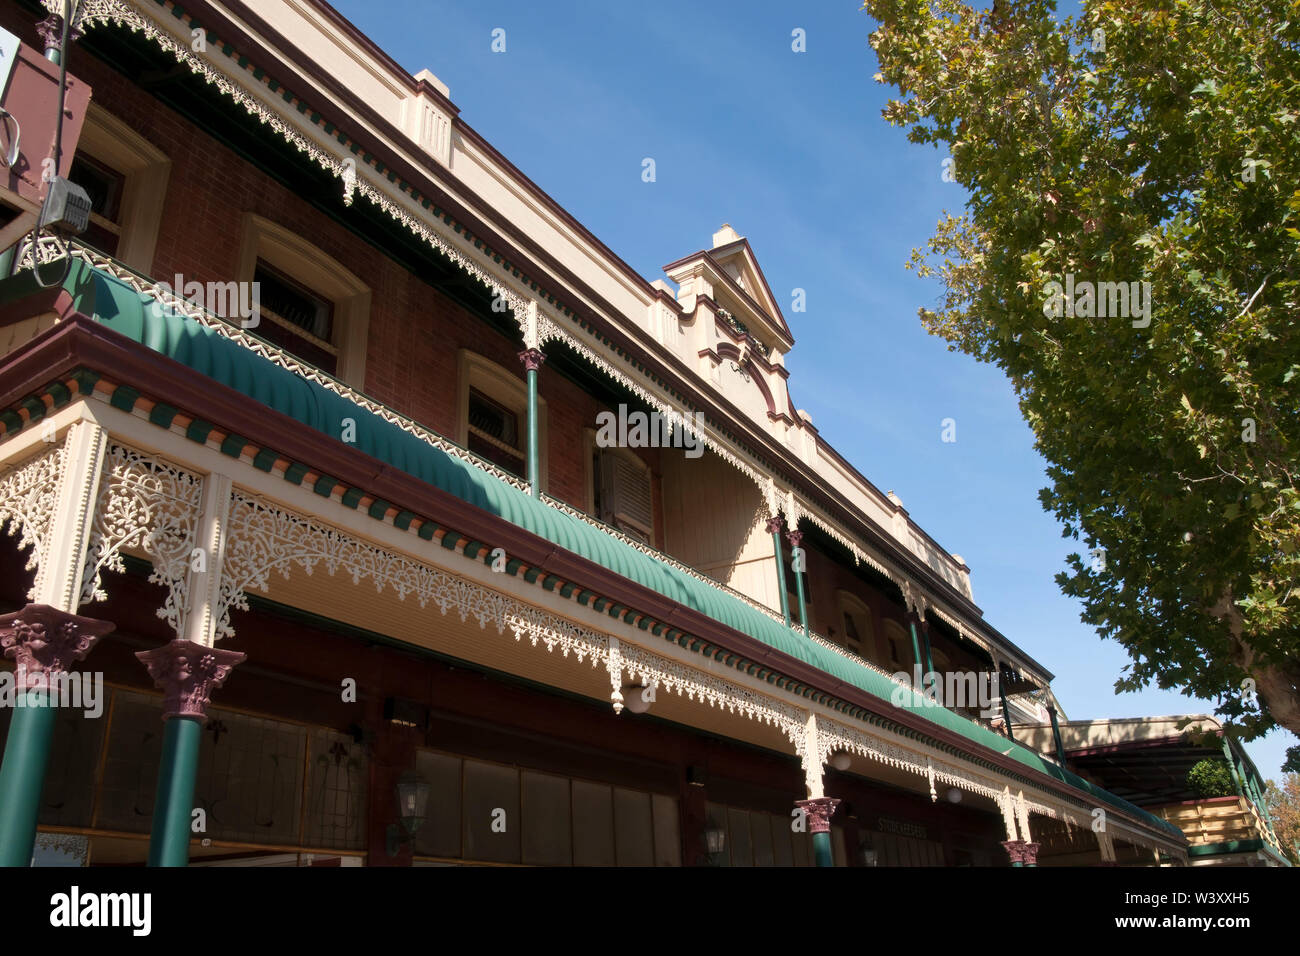 Narrandera Australia, historic building with traditional lace ironwork decoration on the veranda Stock Photo